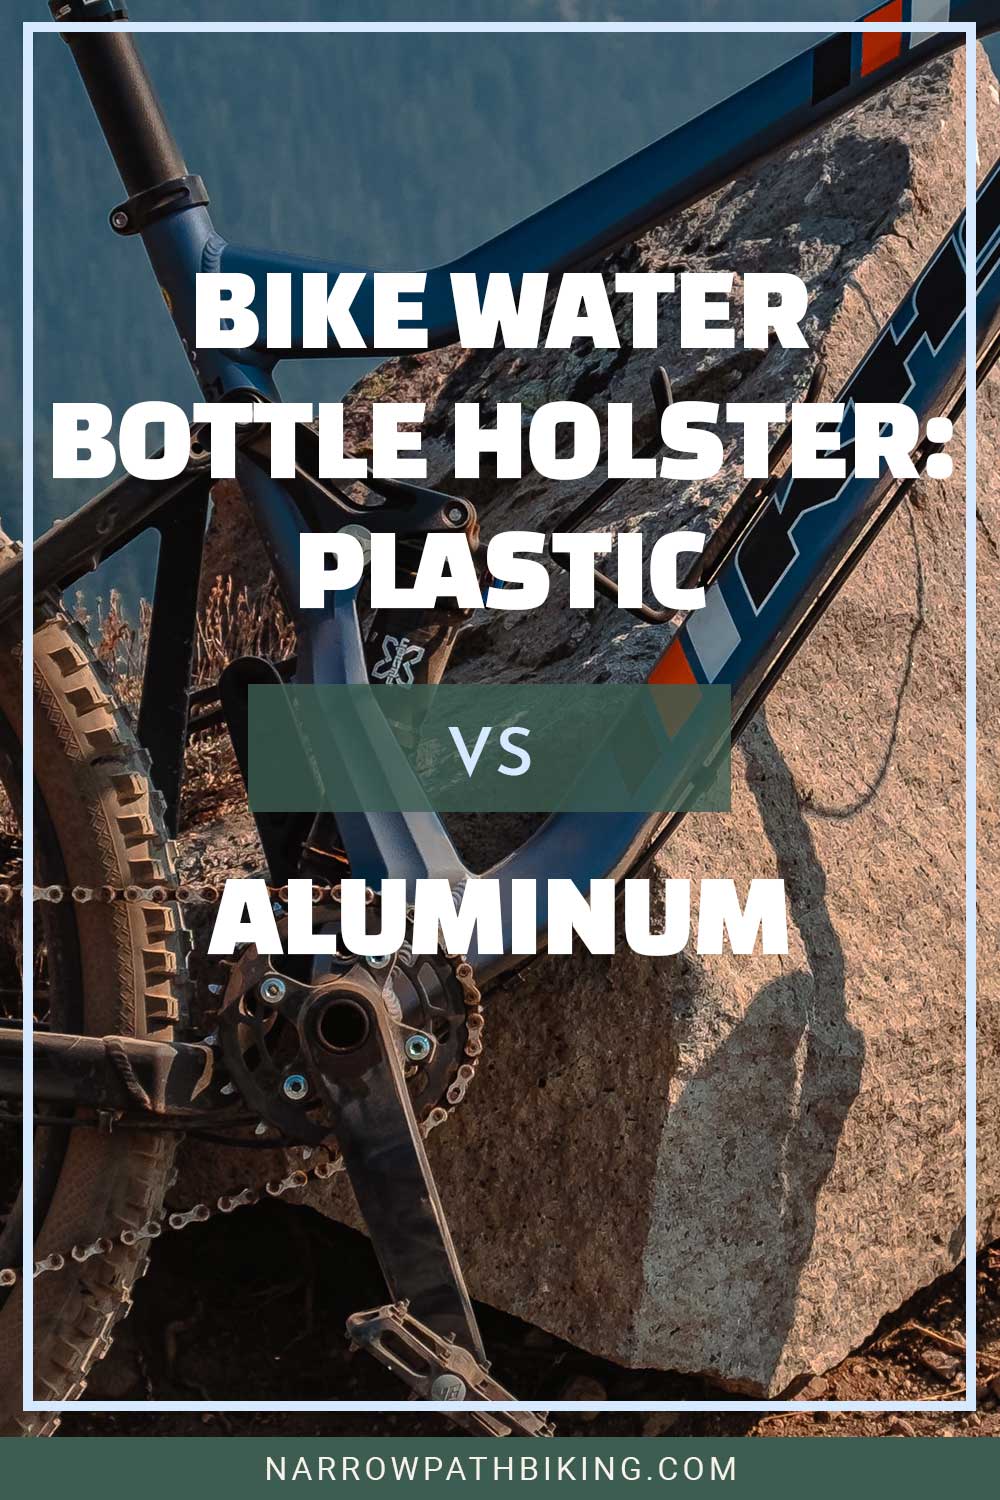 A blue bike and it's lower part - Bike Water Bottle Holster: Plastic vs Aluminum.